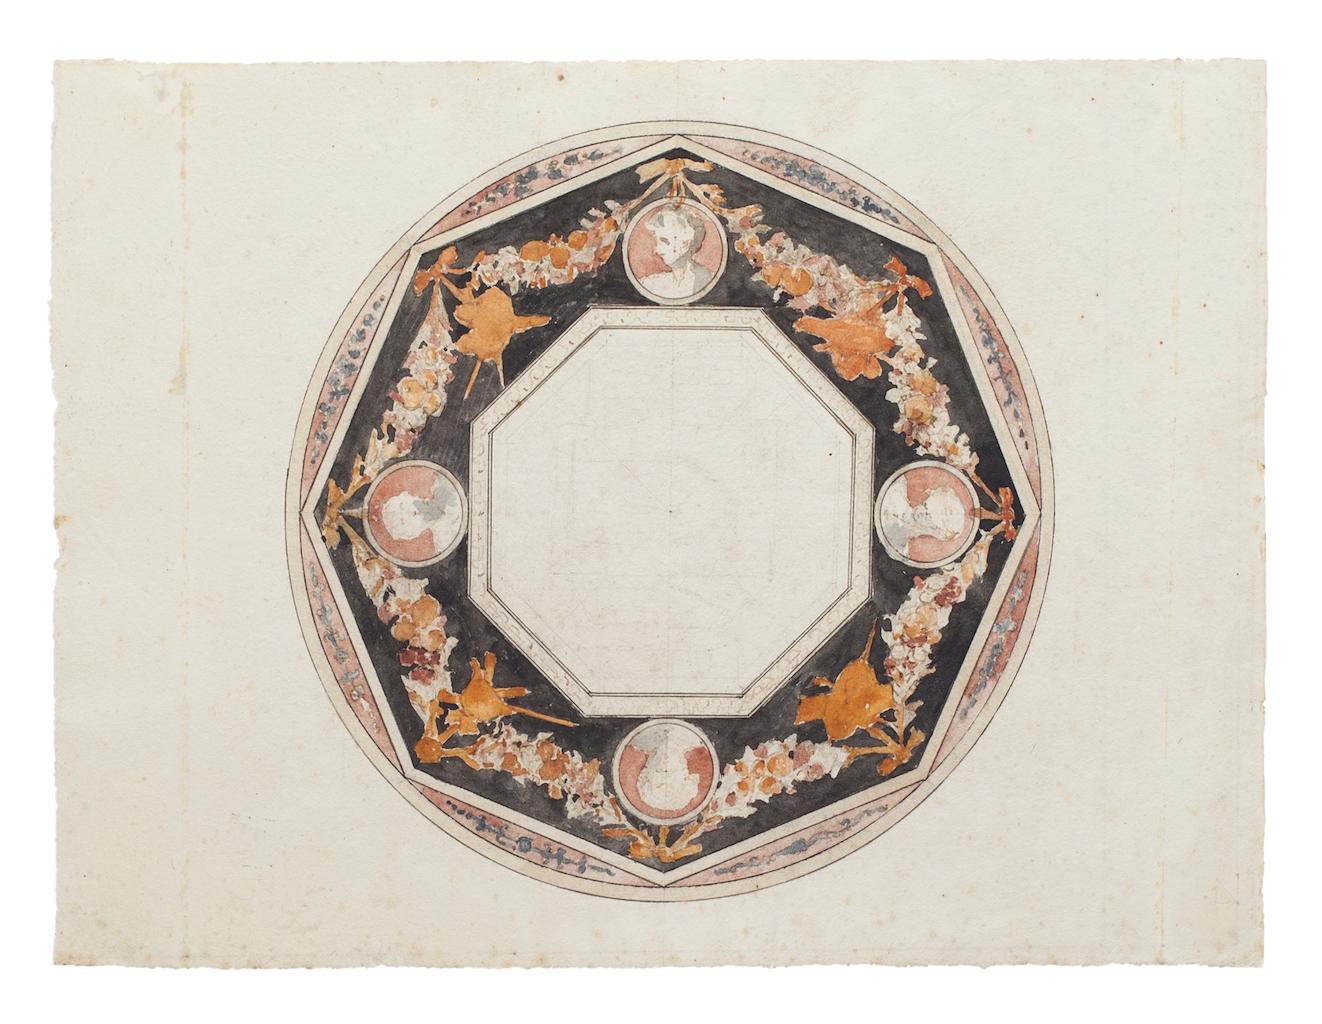 Illustration – Tinte und Aquarell auf Papier – 18. Jahrhundert